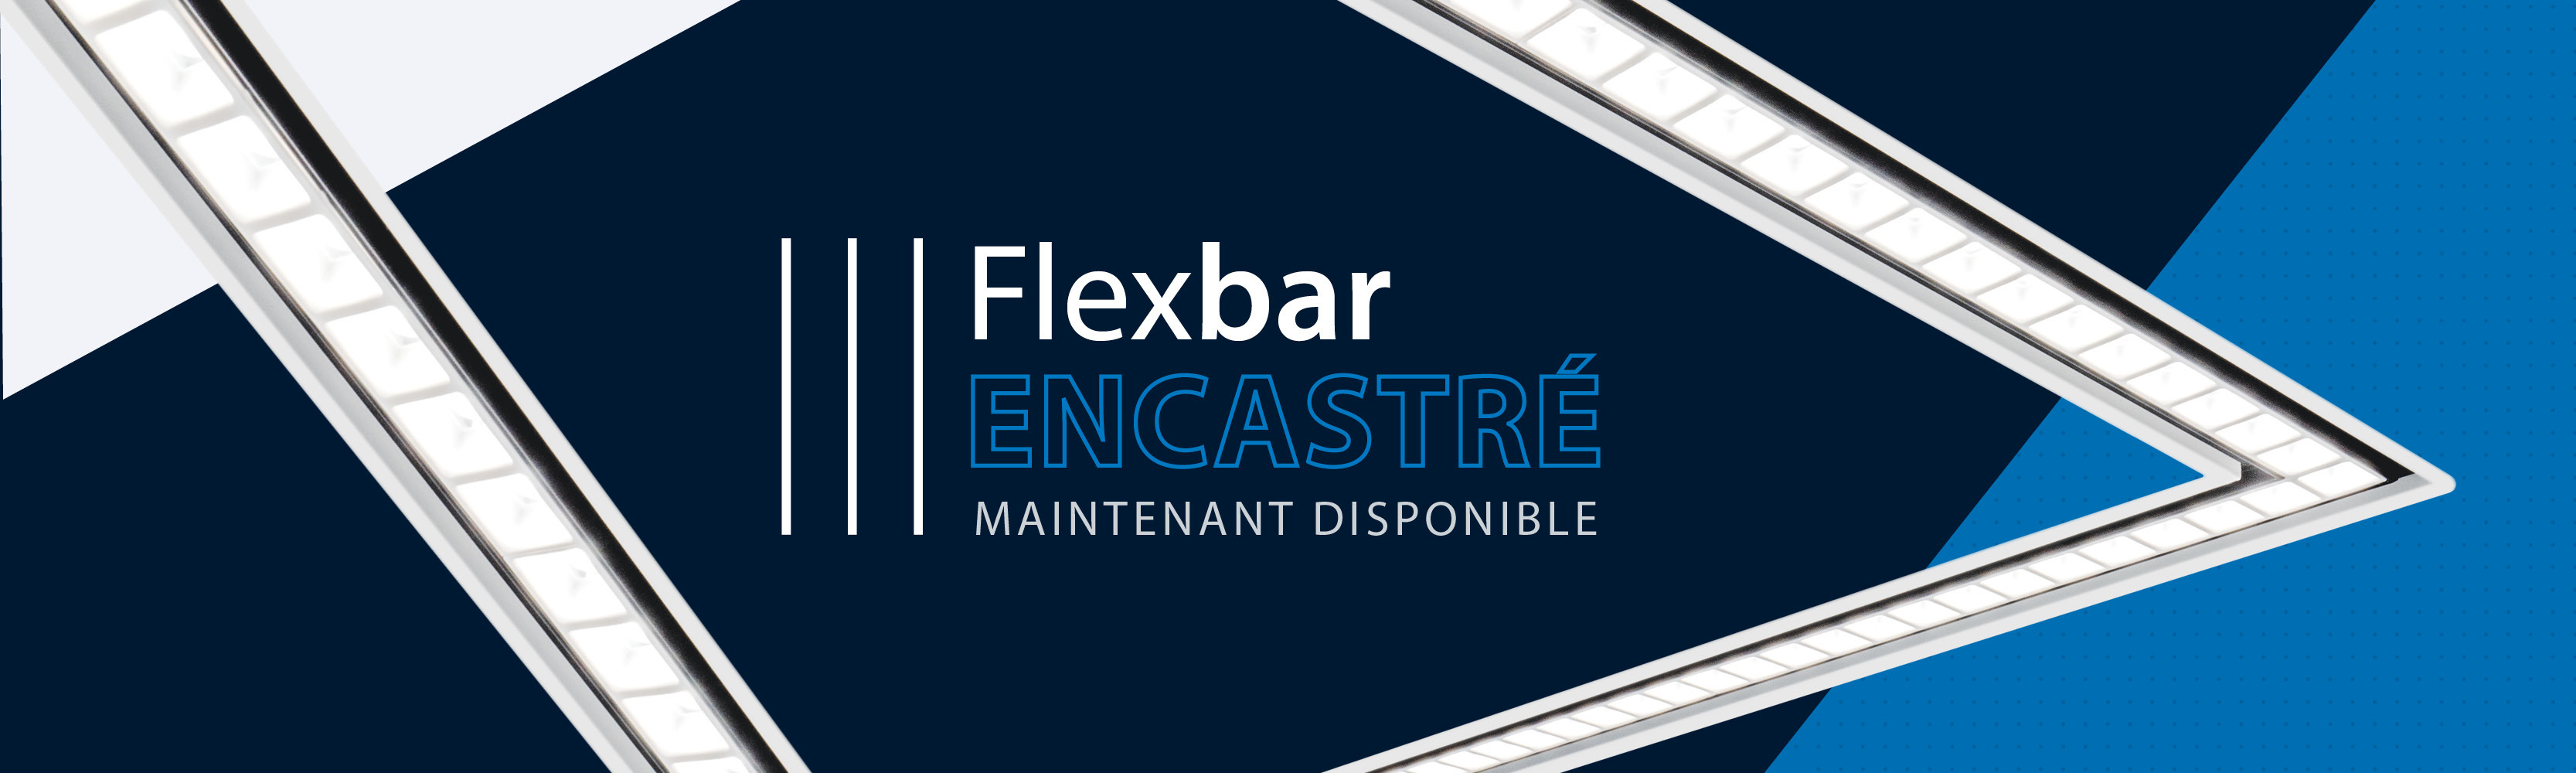 Flexbar - Maintenant disponible en version encastrée !